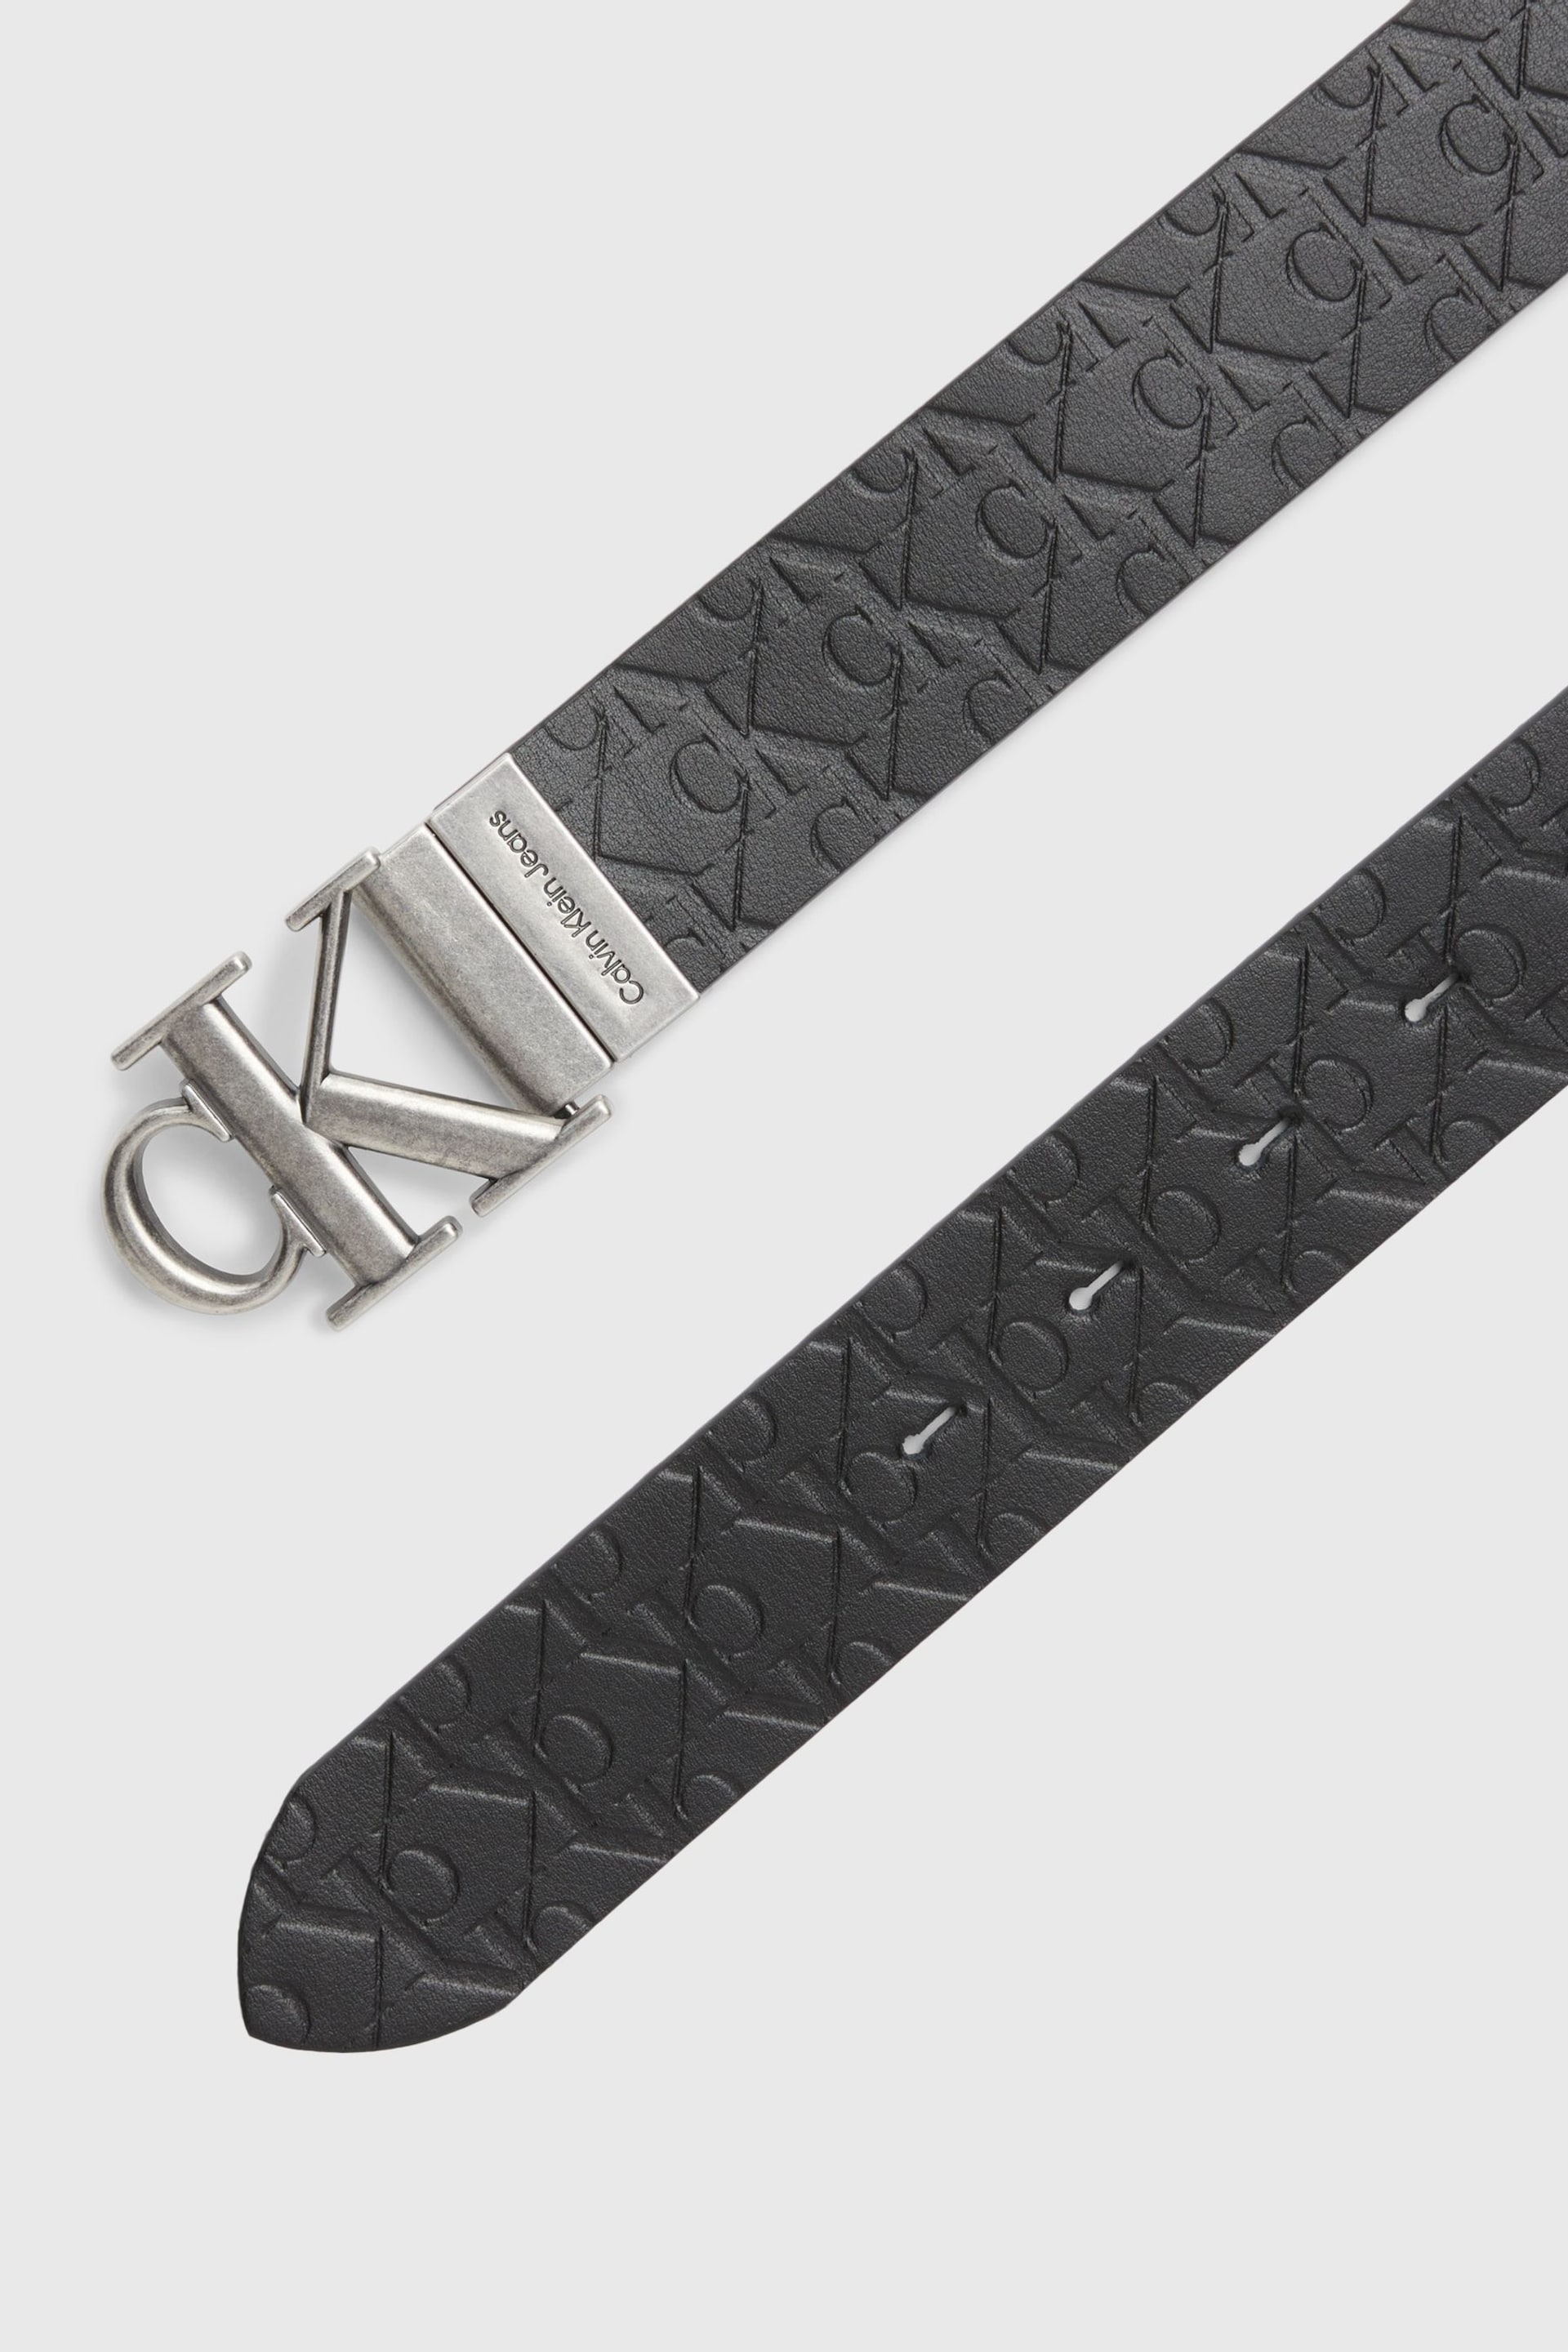 Calvin Klein Black Logo Belt - Image 3 of 4